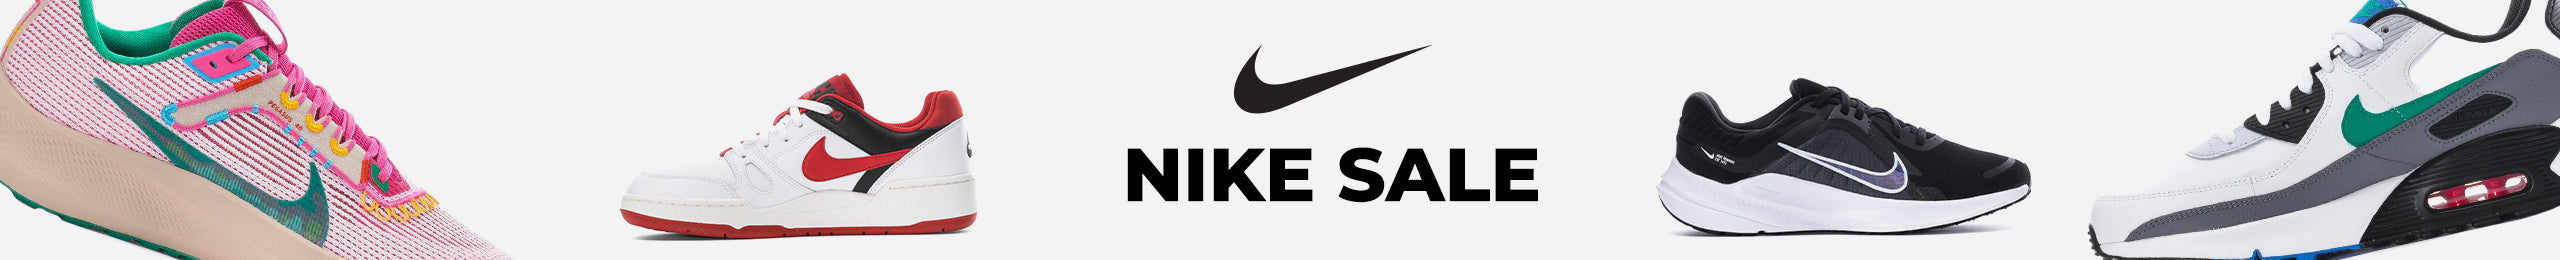 Nike Sale 2560x260 0631f42d f9aa 43e6 9d3f e059d12279a0